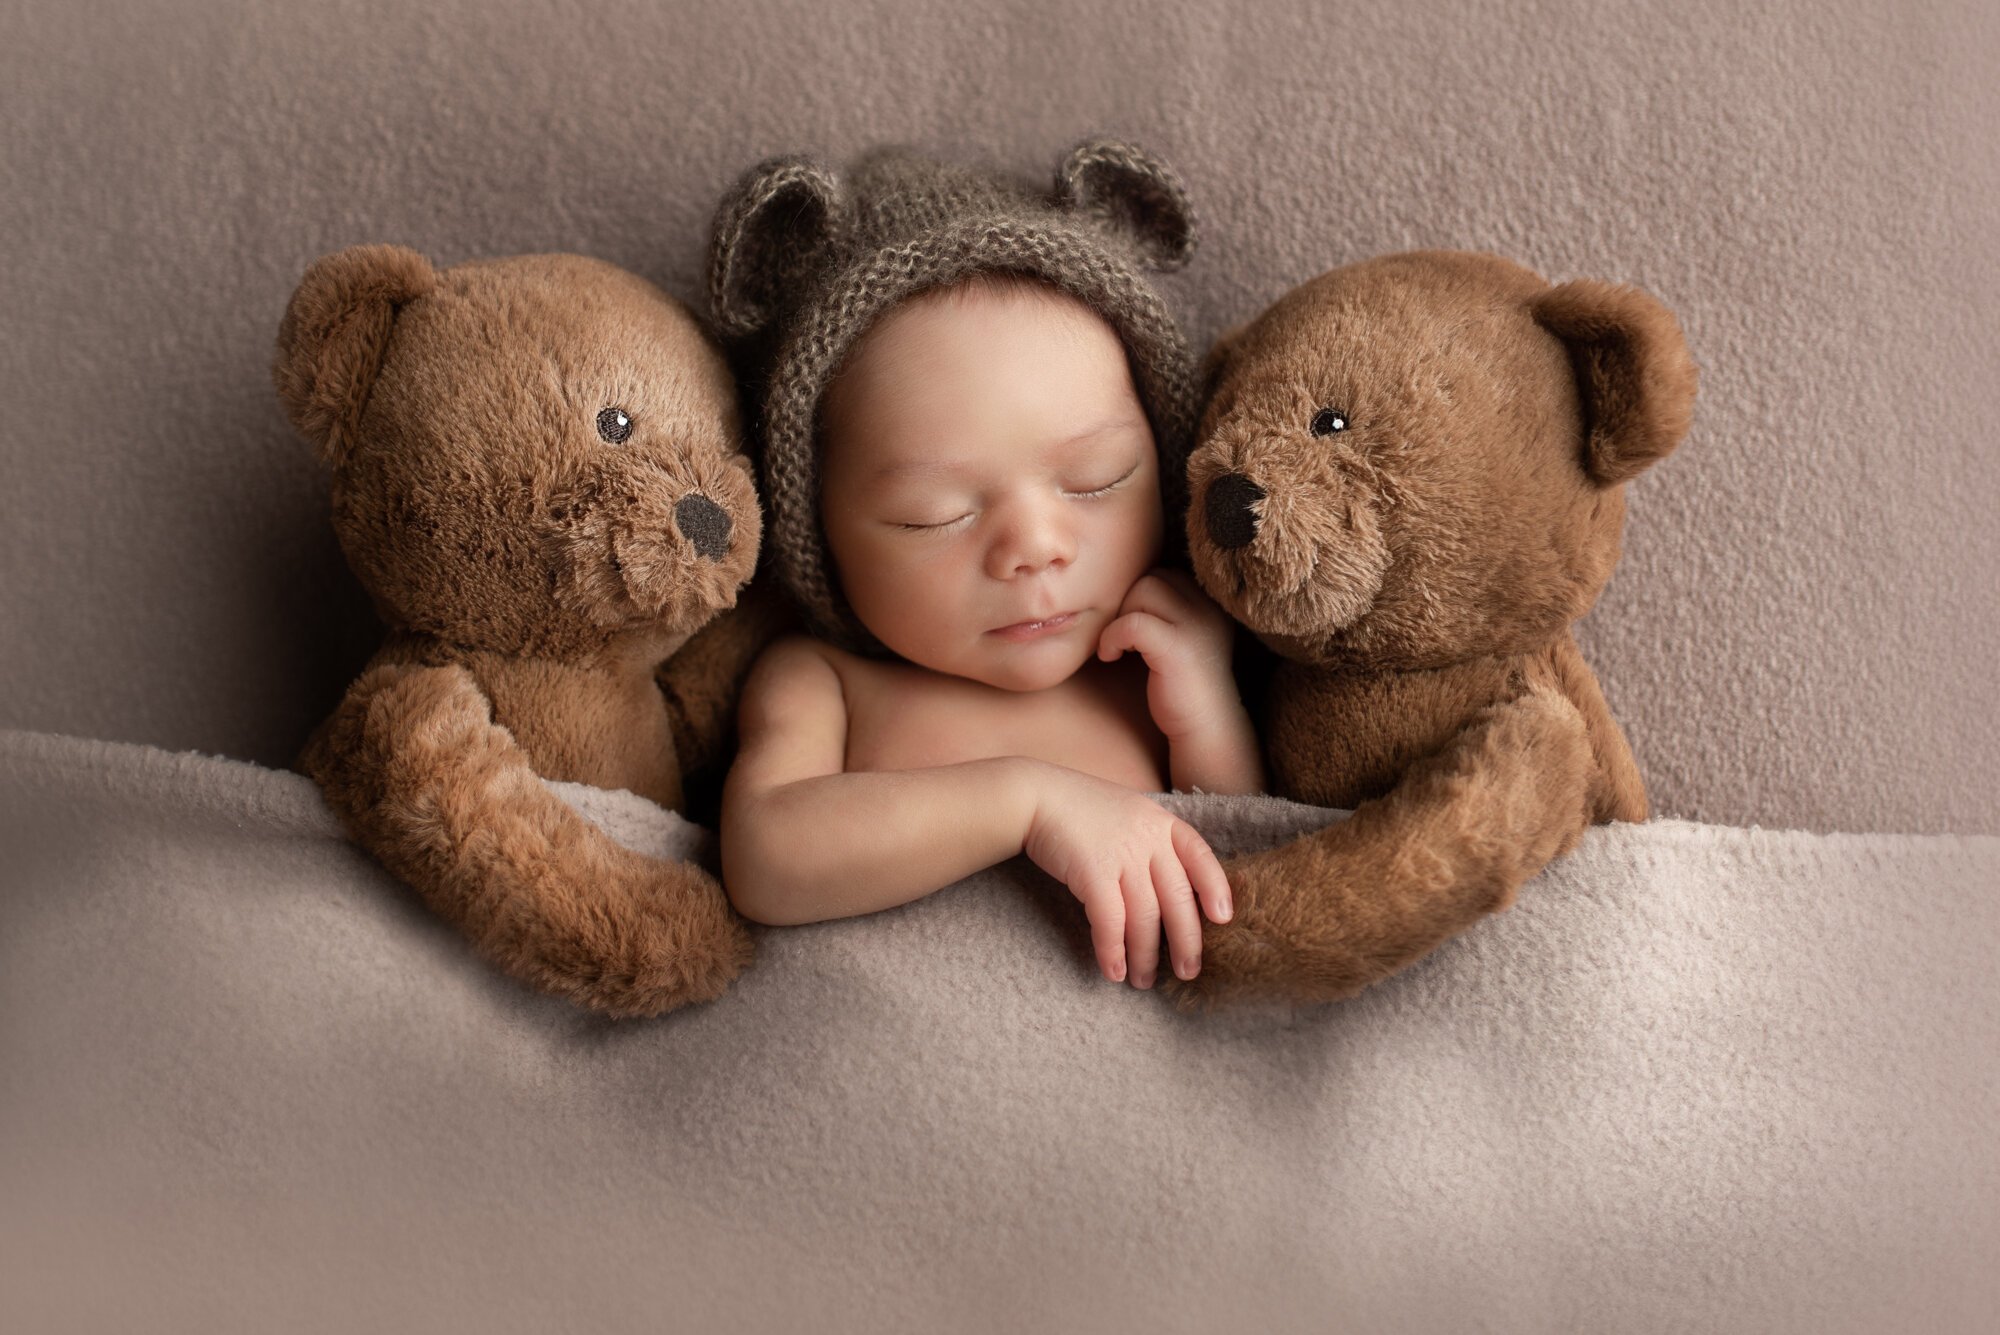 Baby Boy with Teddy Bears Ohio